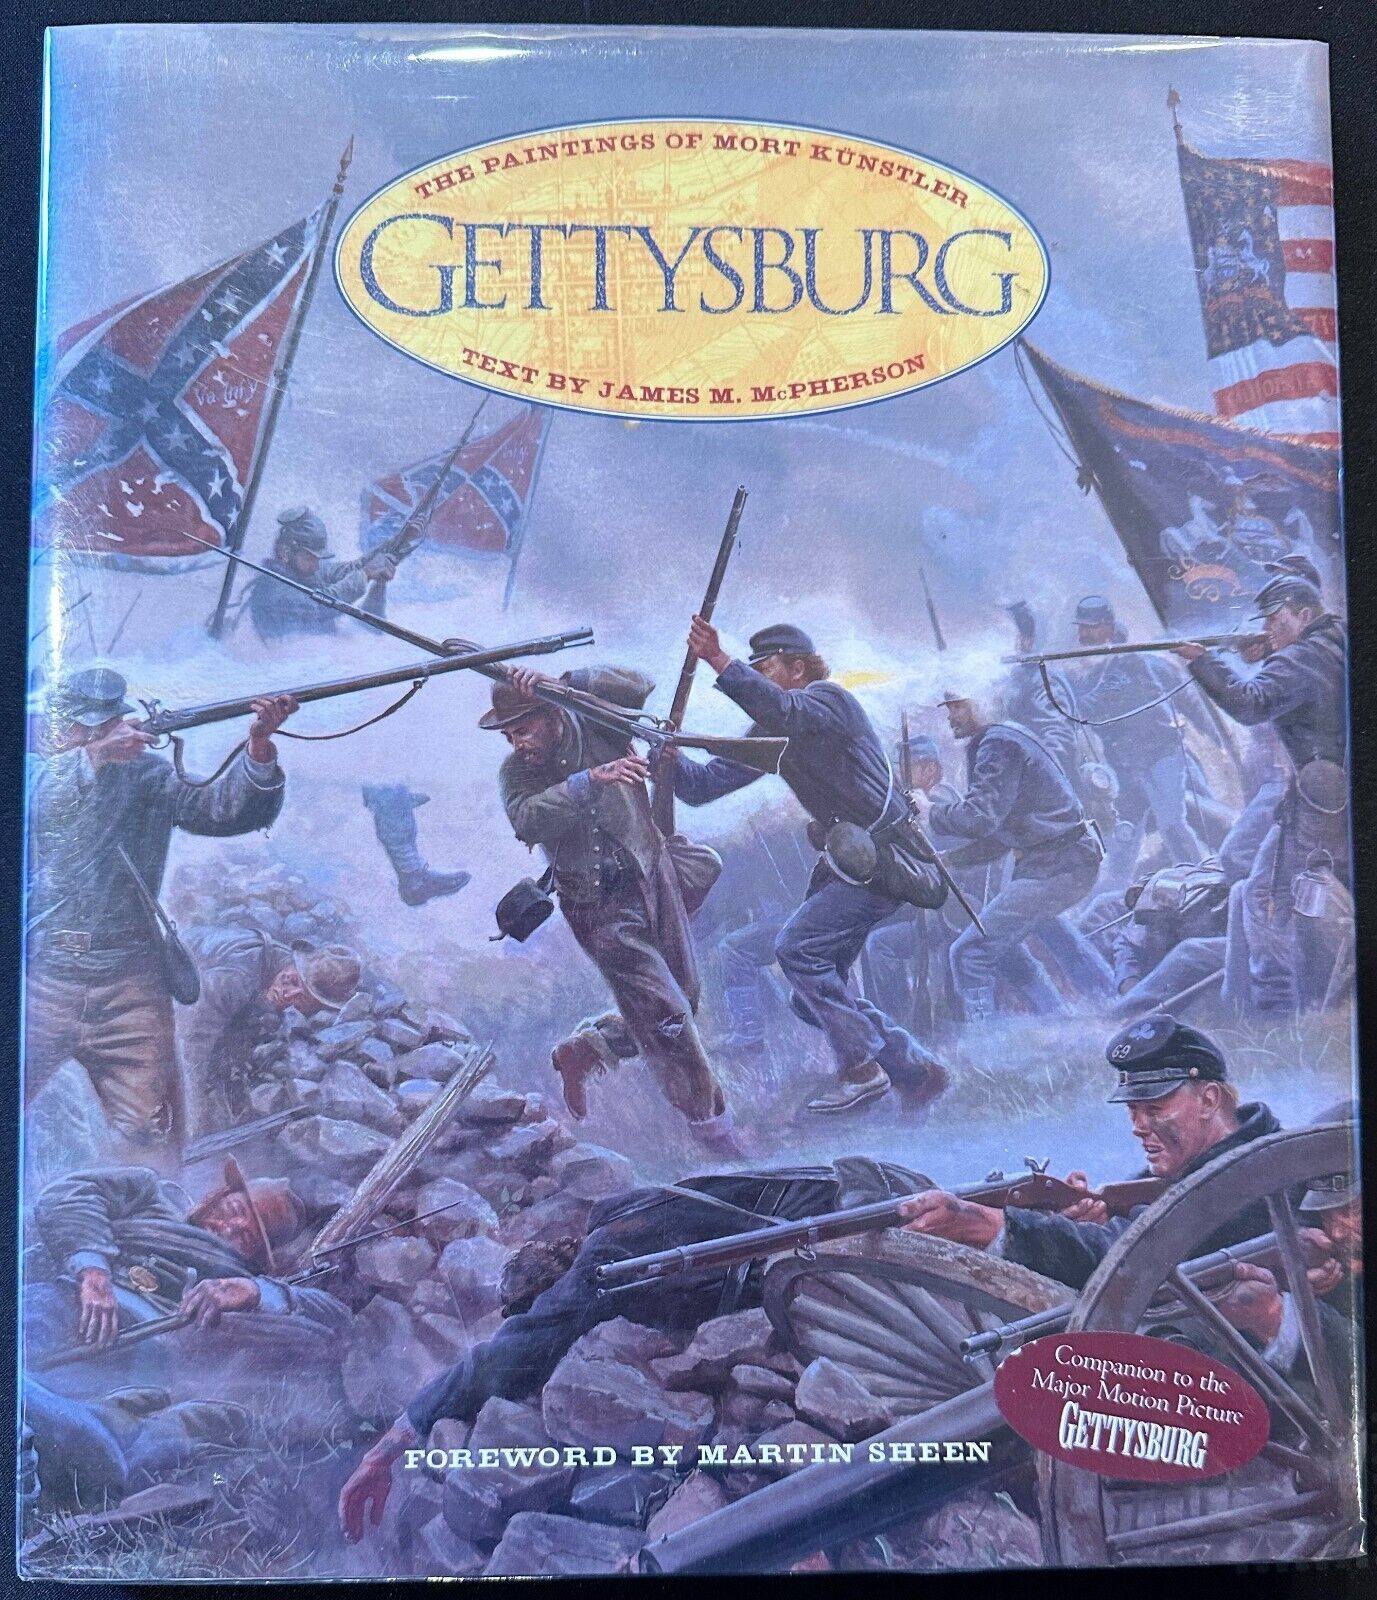 Gettysburg The Paintings of Mort Kunstler - James M. McPherson HCDJ